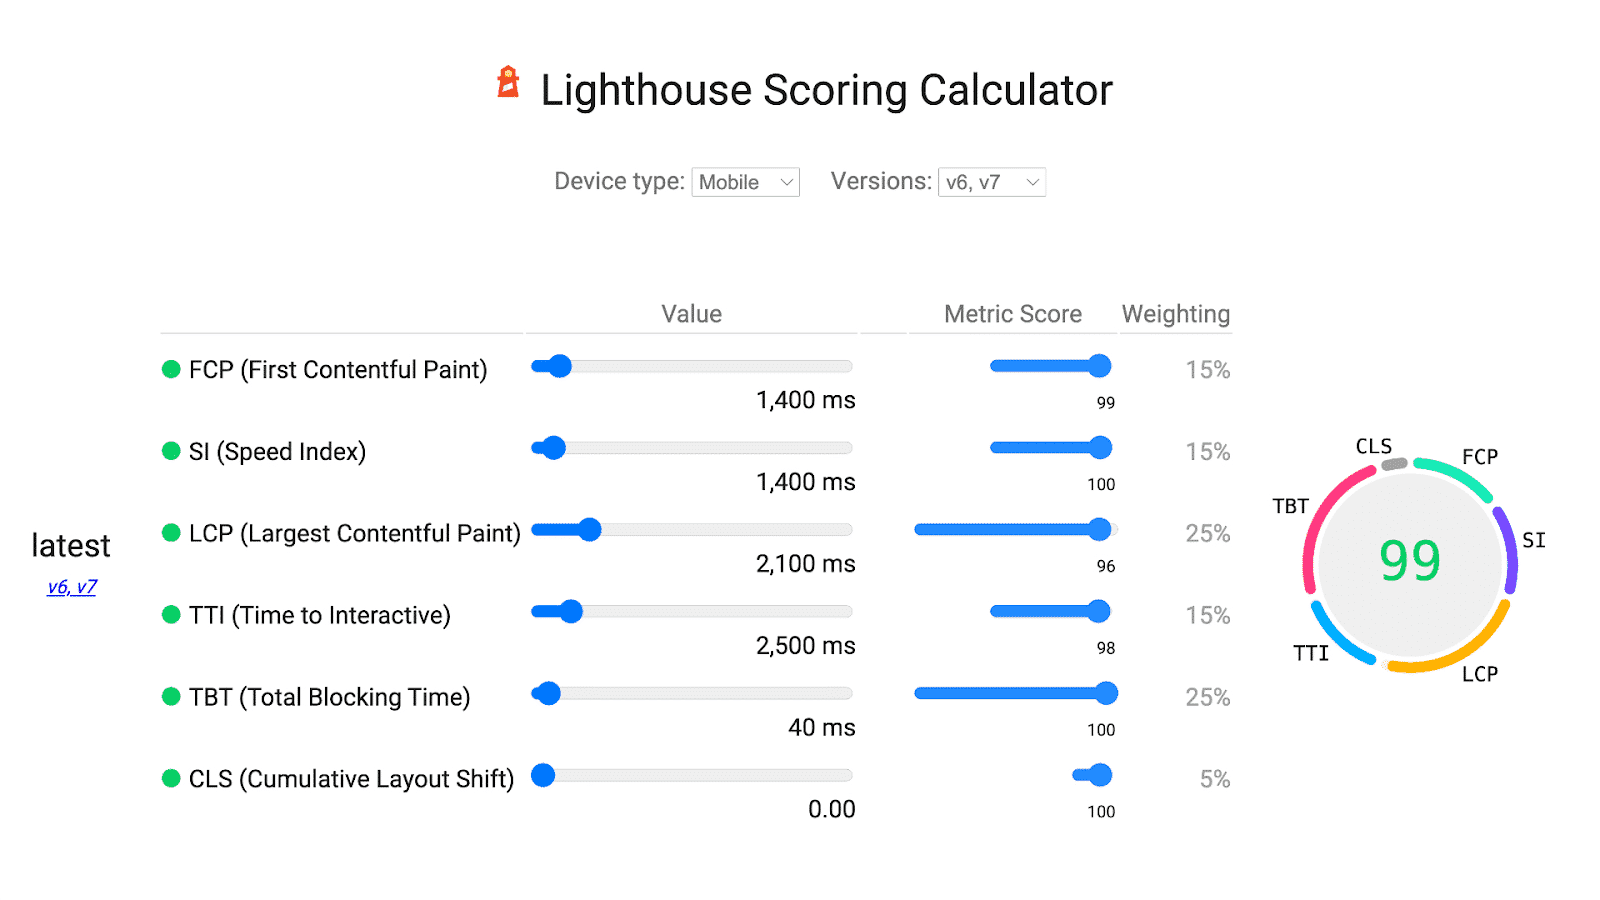 Lighthouse ccoring calculator